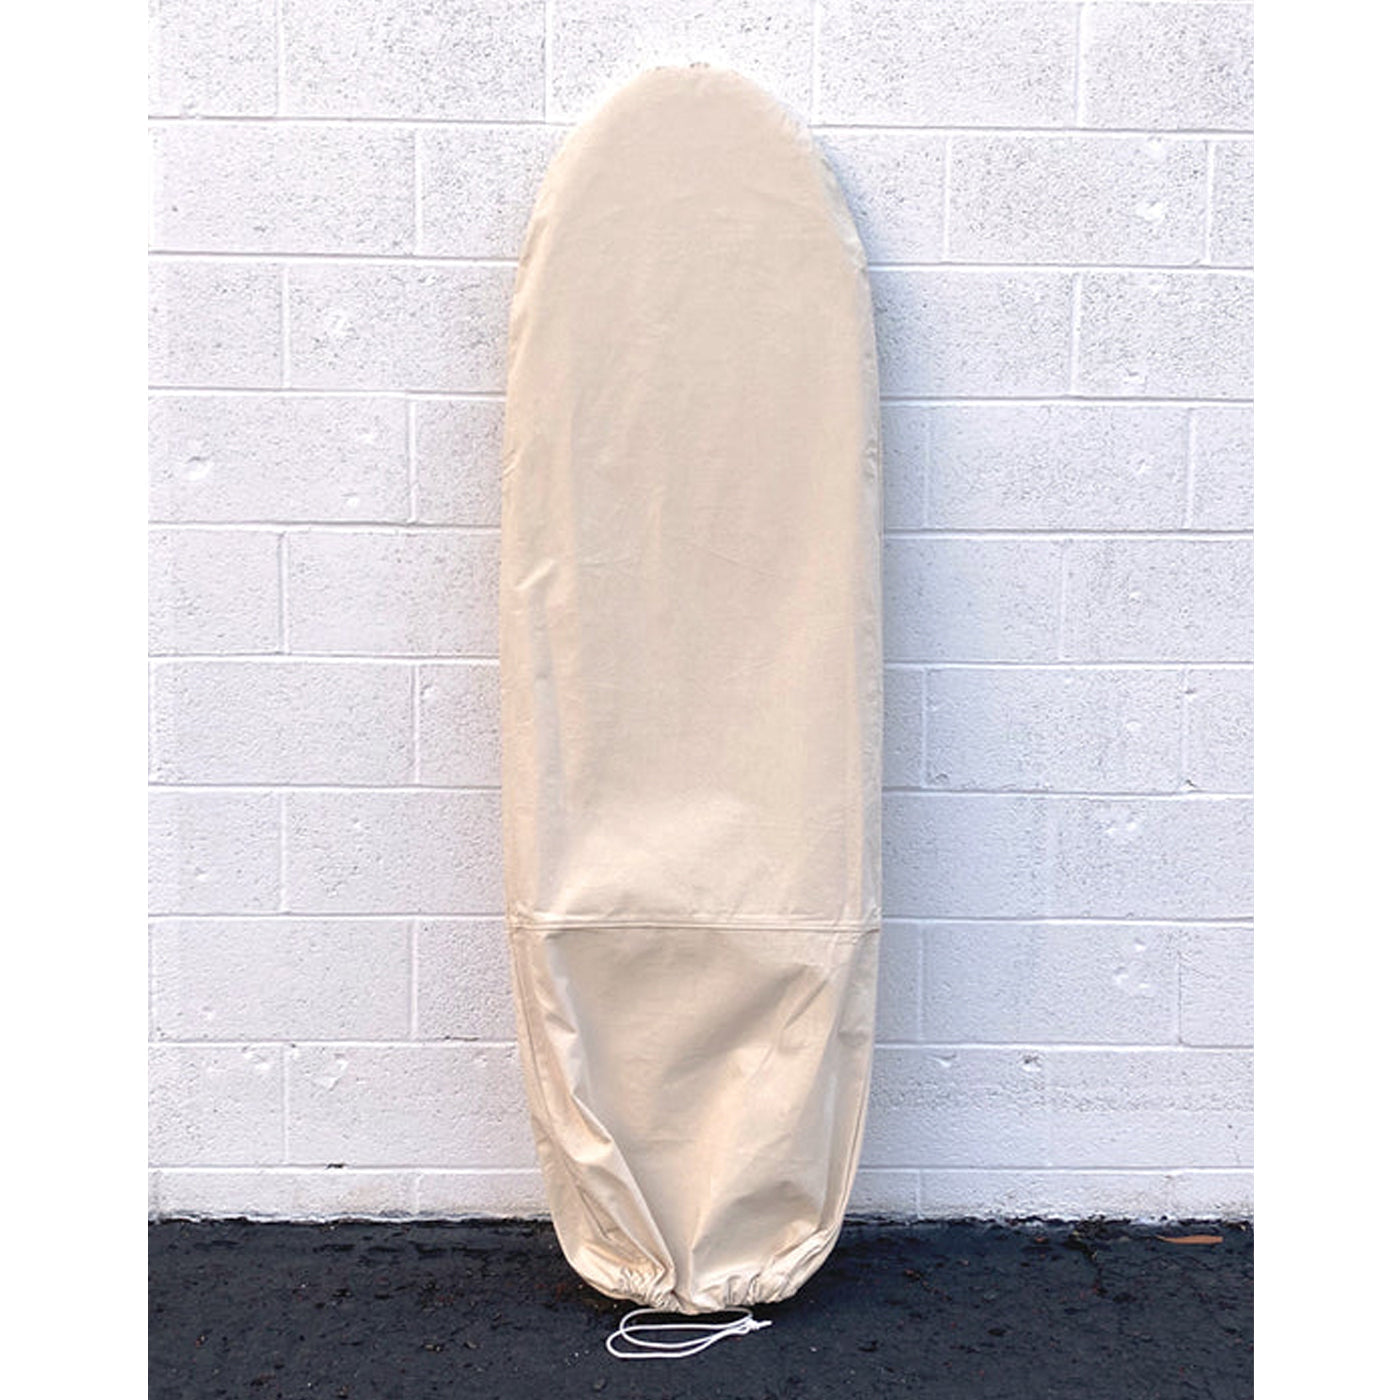 Green Fuz | Blanco Canvas Board Bag | 8'0